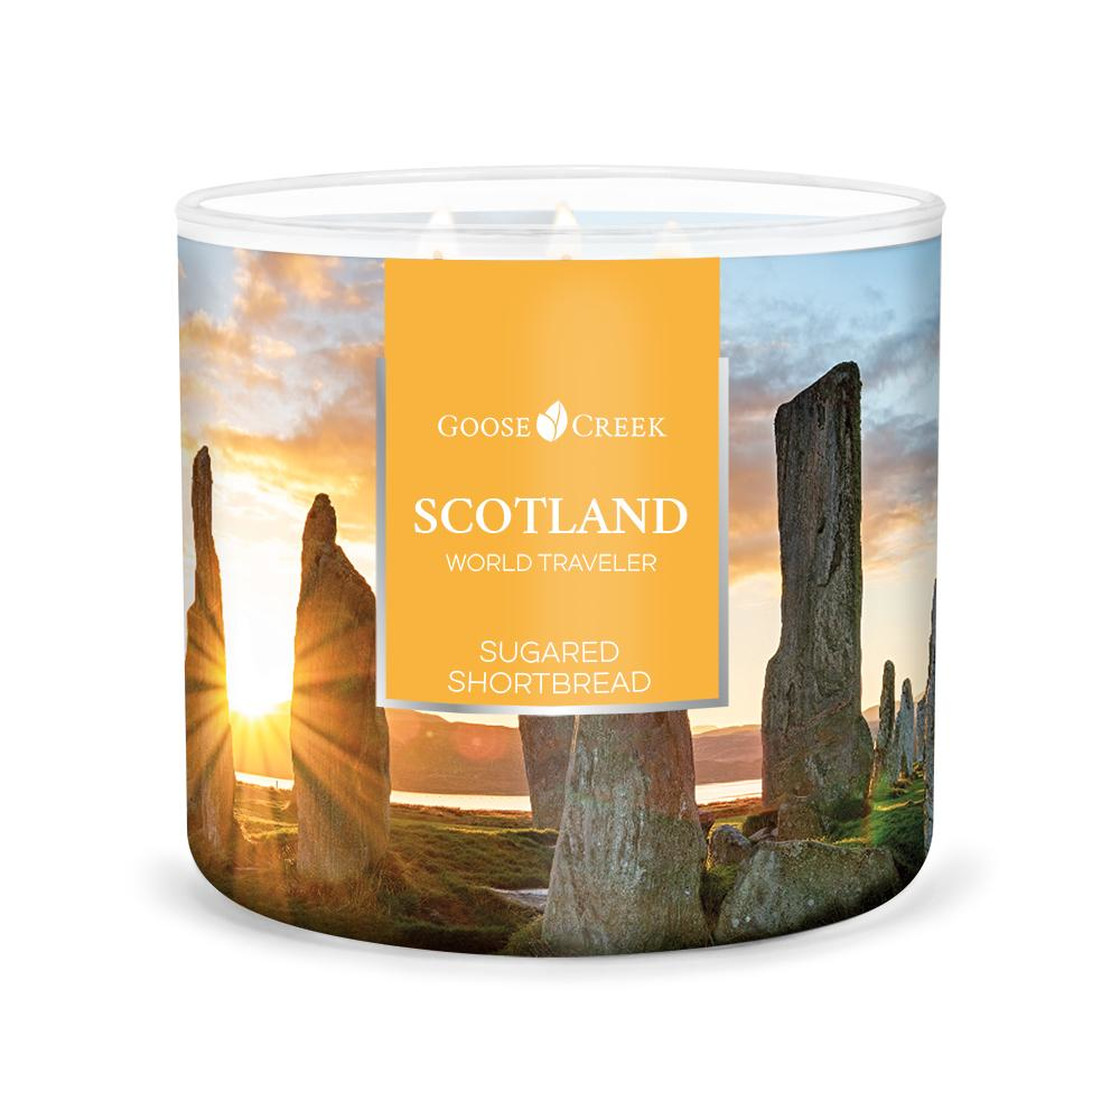 Svíčka Goose Creek World Traveler Scotland - Sugared shortbread - Pocukrované sušenky 411